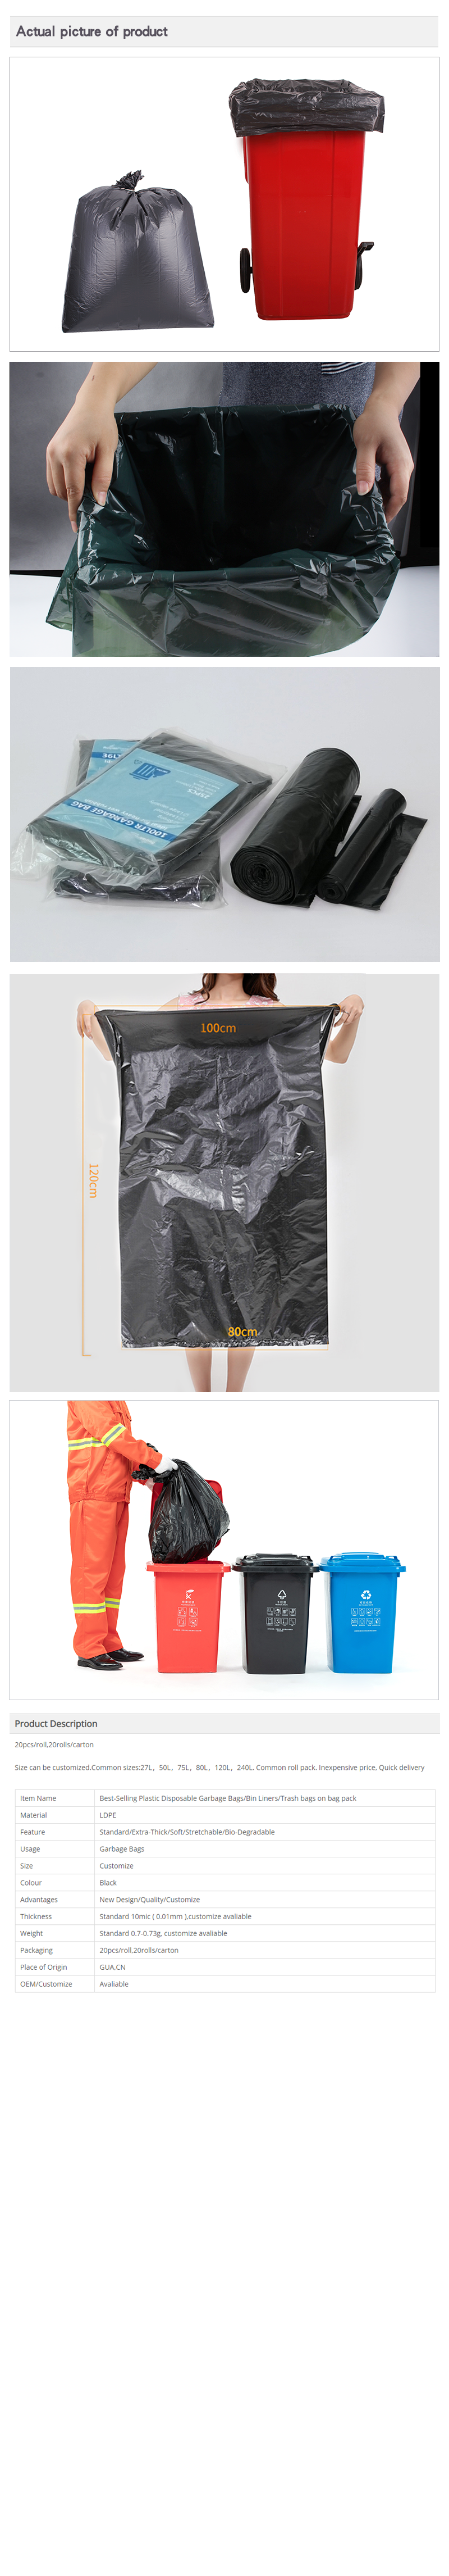 Big Size Heavy Duty Black Garbage Bag - China Garbage Bag and Trash Bag  price